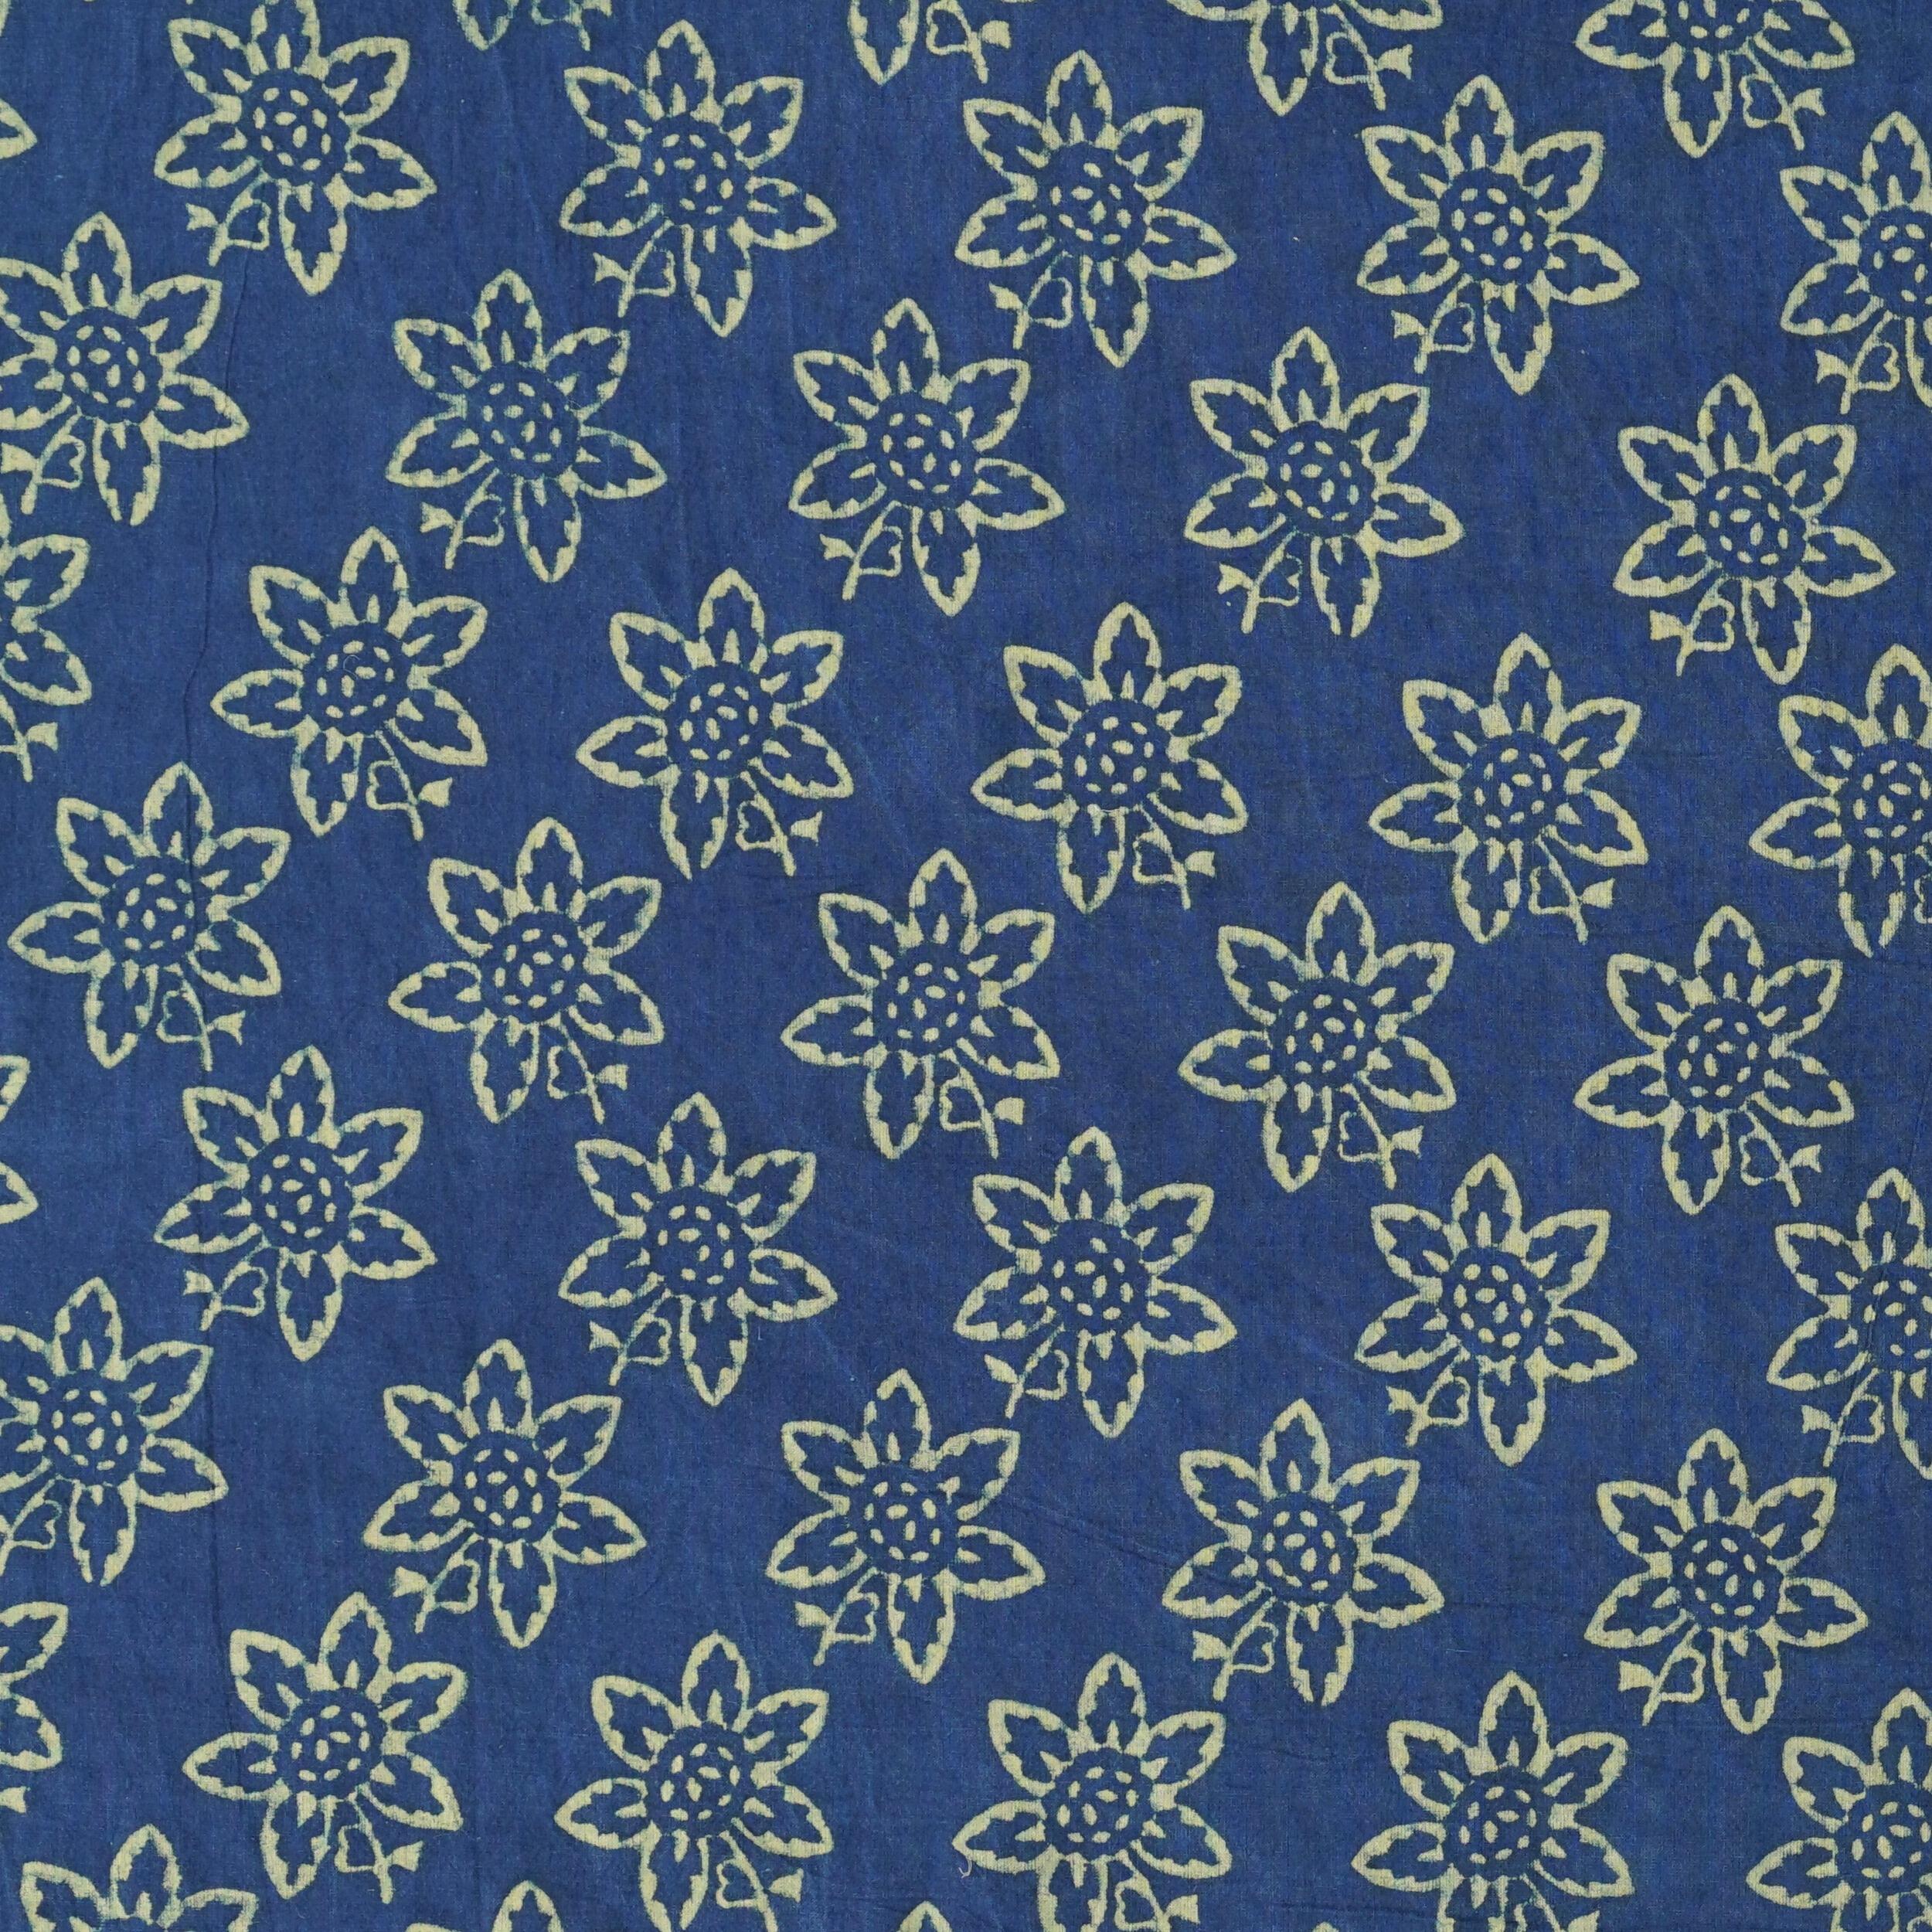 2 - AHM55 - Block-Printed Fabric - Flower Print - Indigo Blue & Tamarisk Yellow - Flat